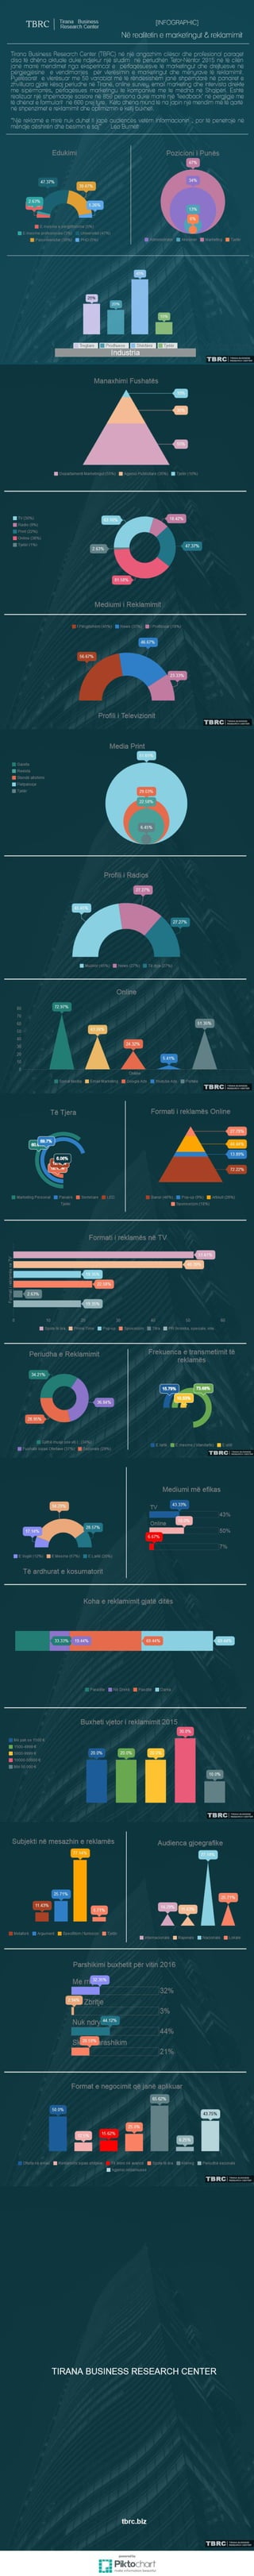 TBRC  Raport infographic